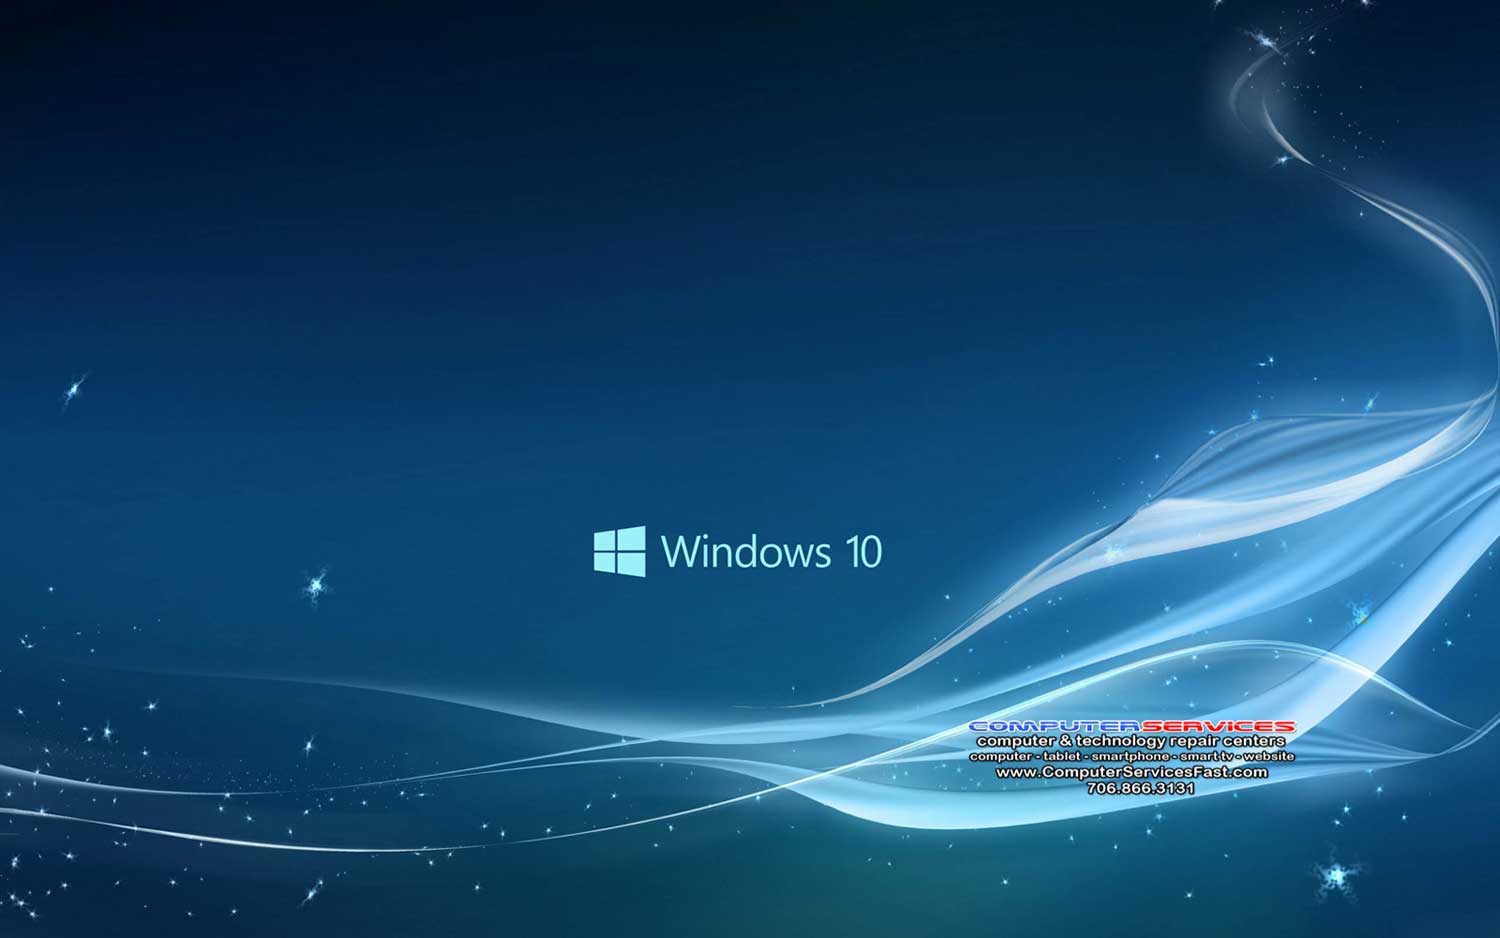 Windows_10_bkgnd_1